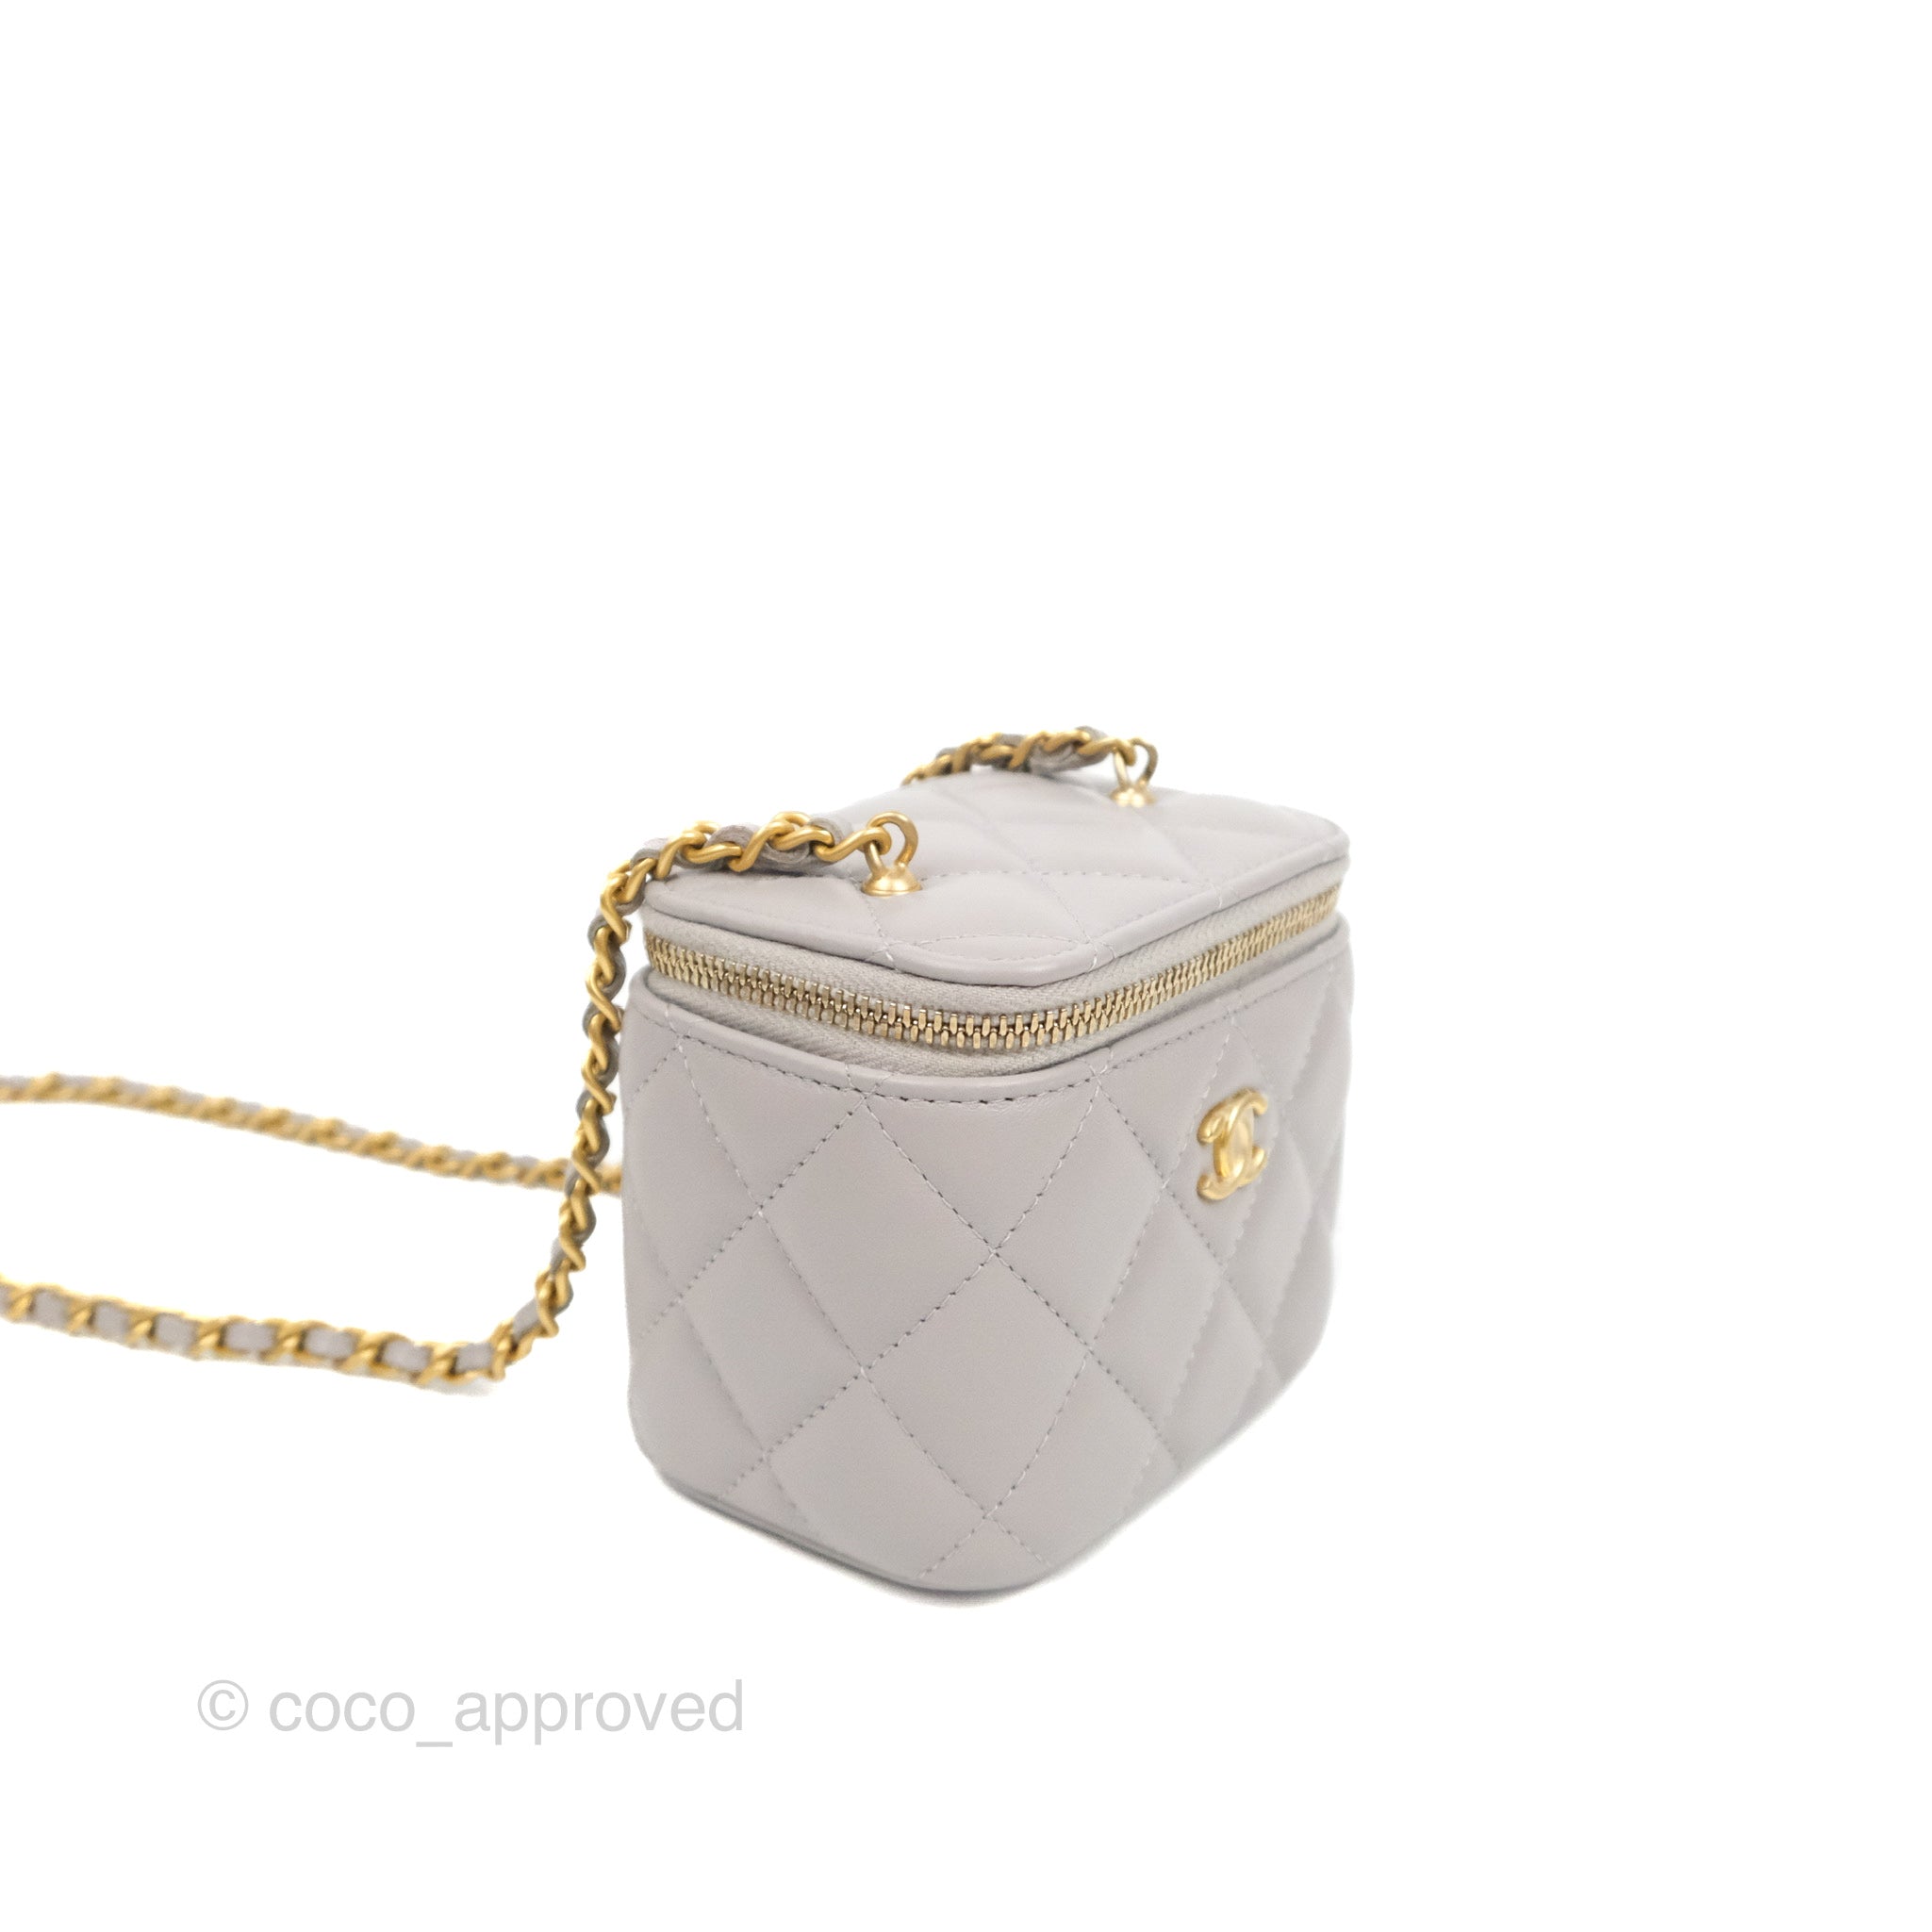 Chanel Lambskin Light Purple Mini Vanity Case Crossbody Bag (2021)